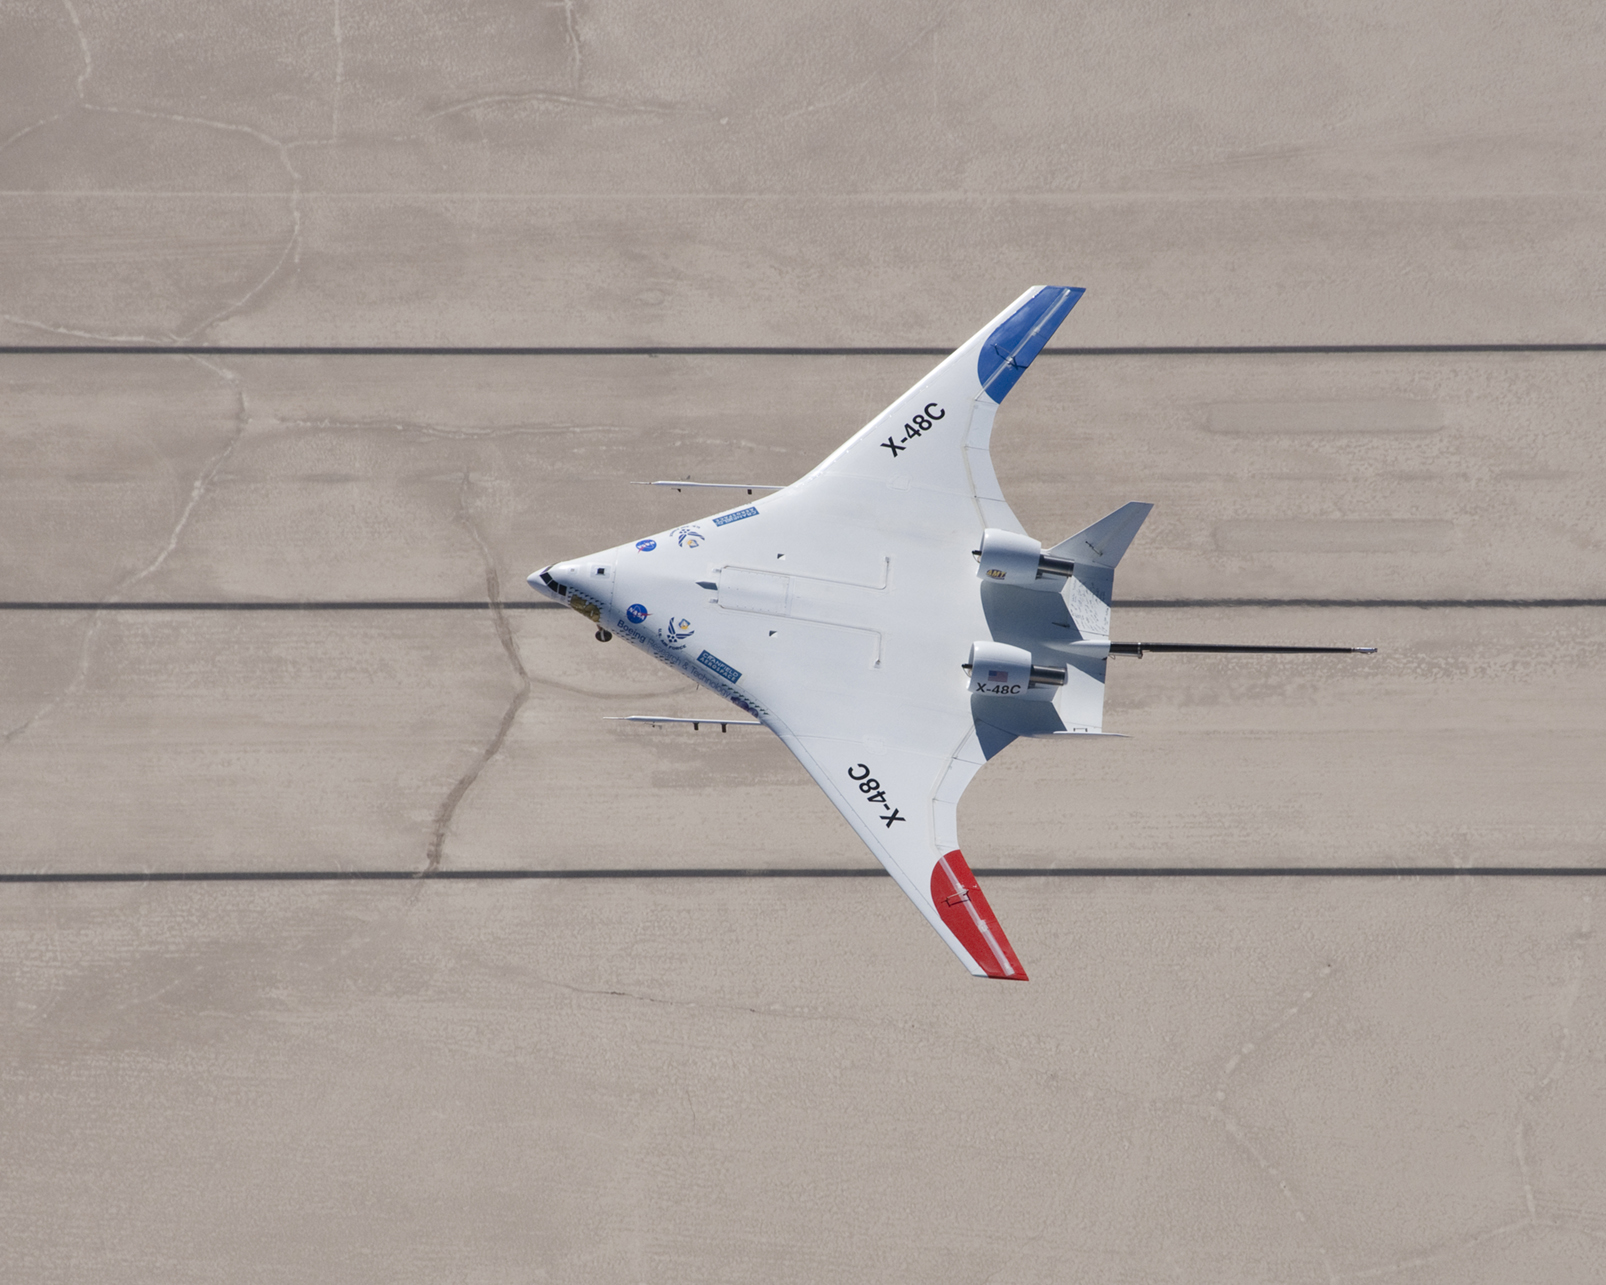 X-48C Hybrid Wing Body aircraft in flight.